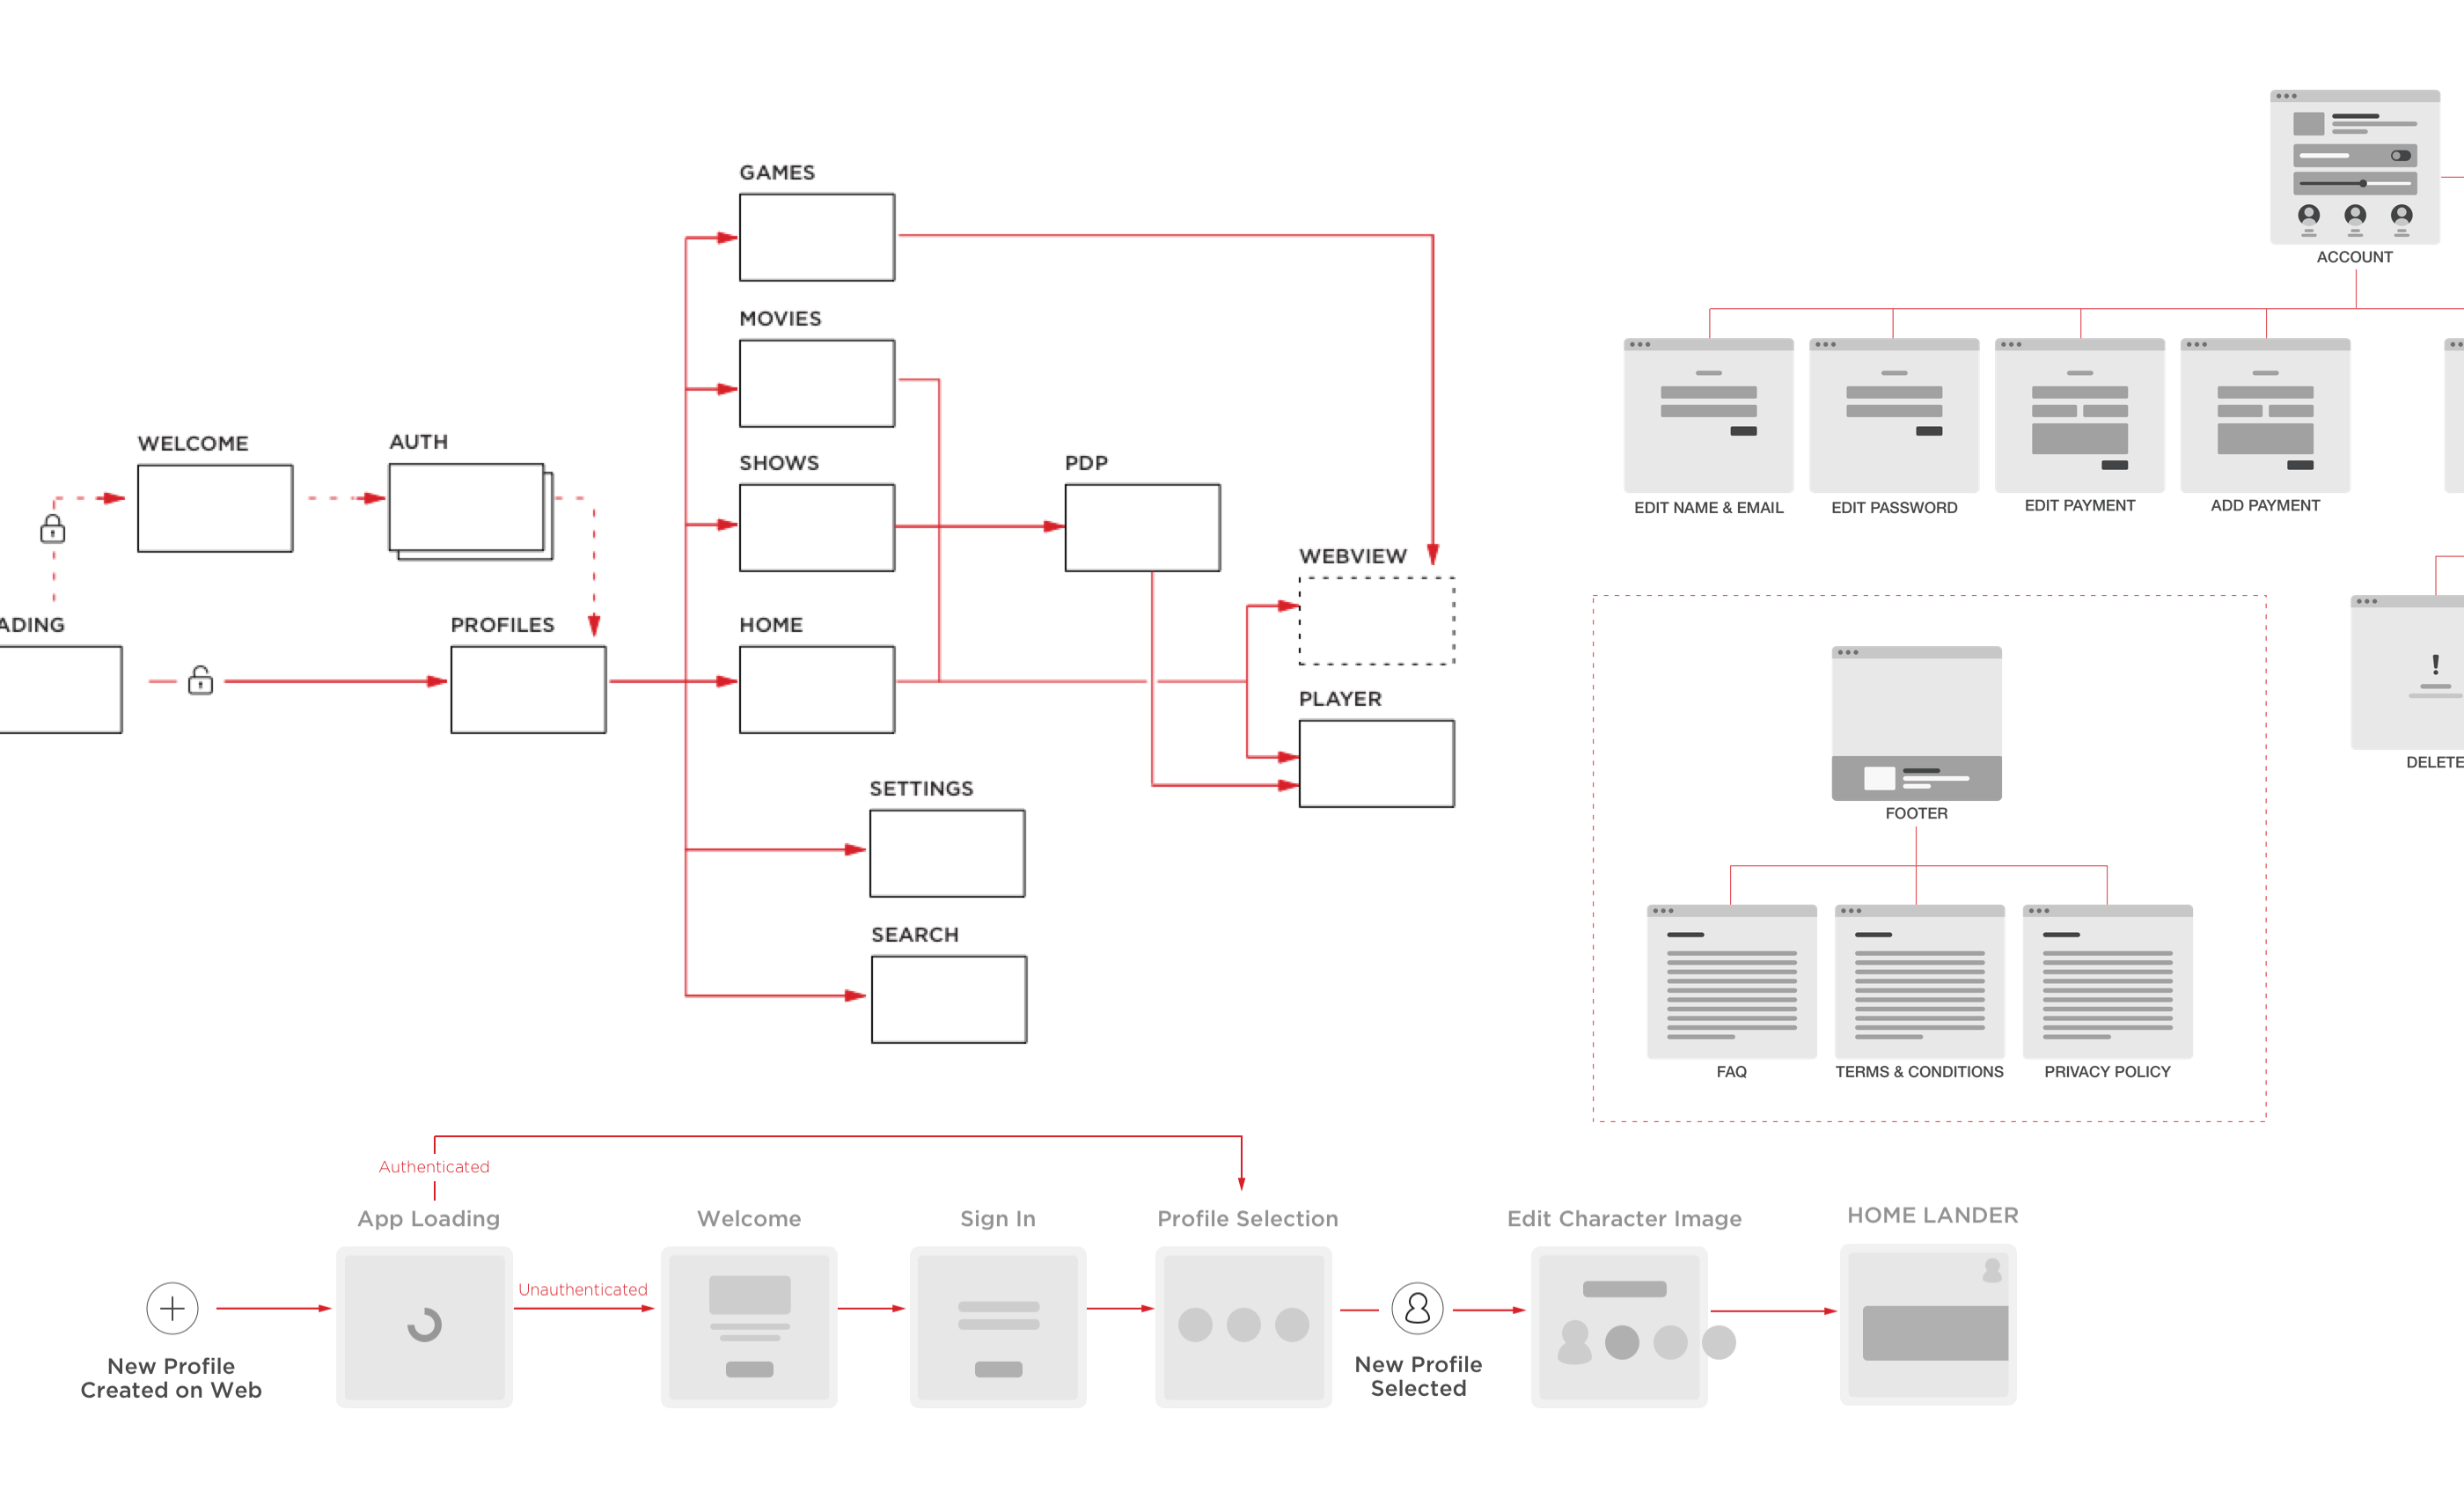 Toonix user flow diagrams